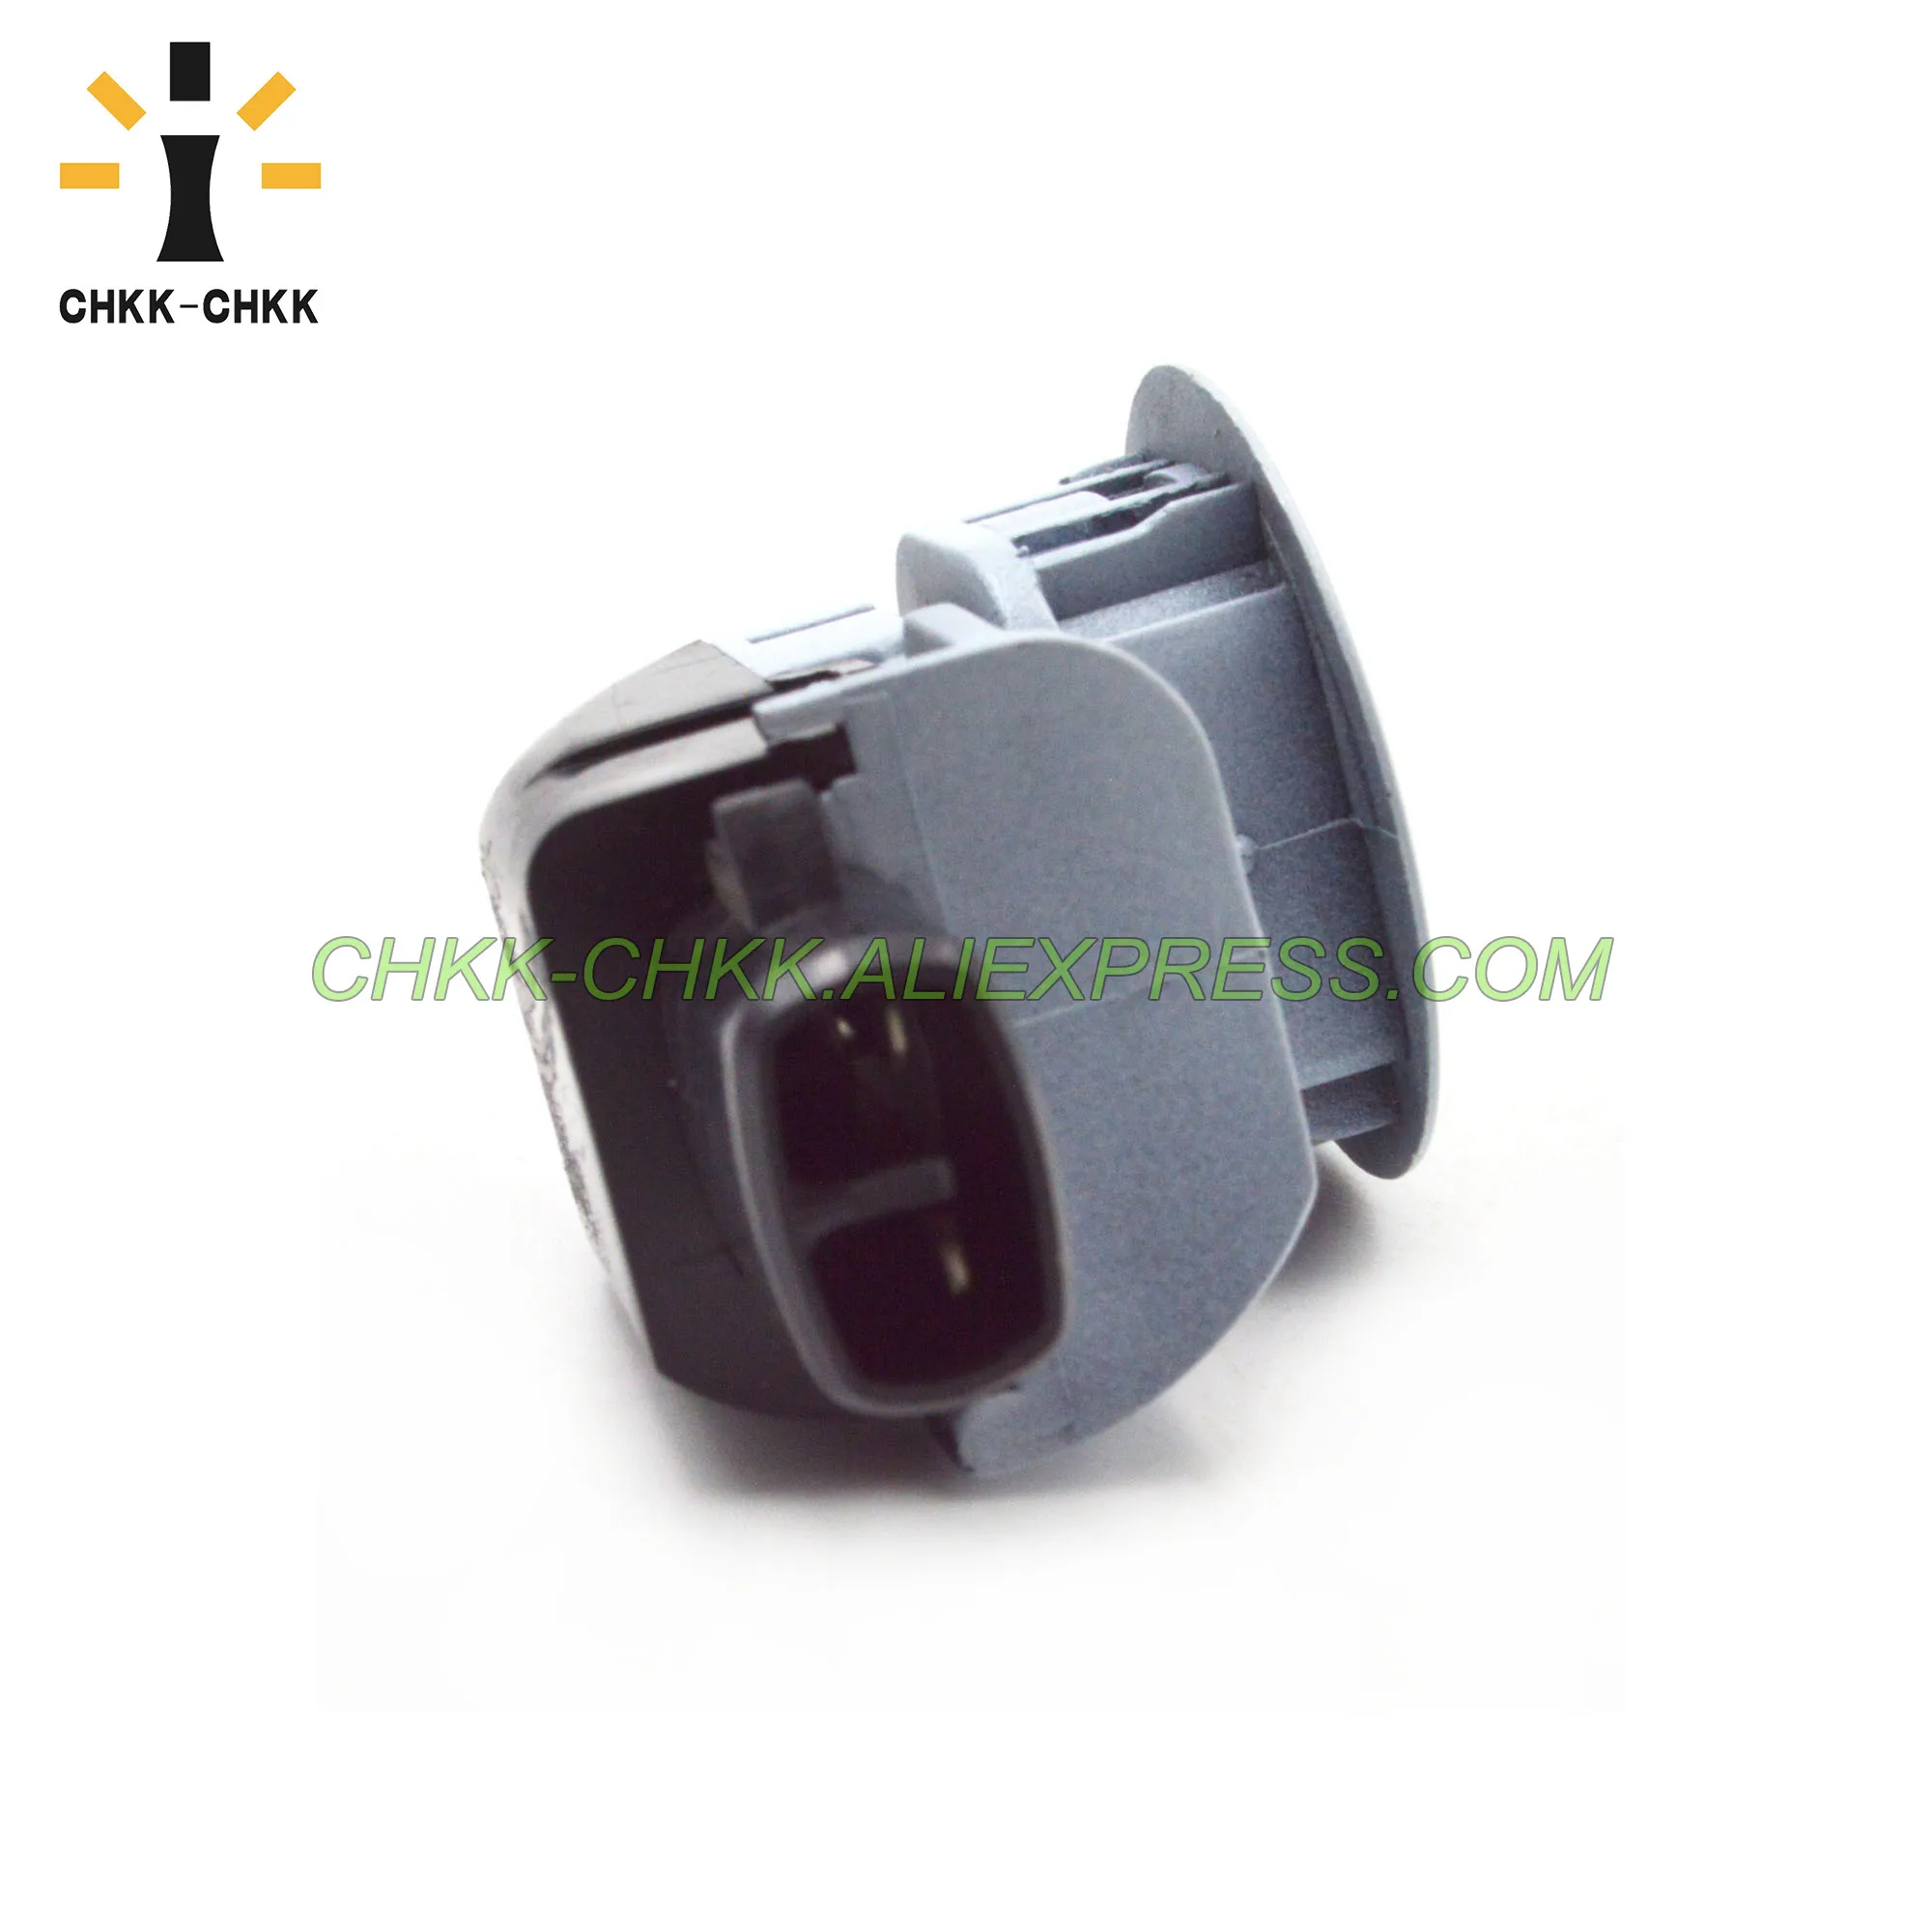 

CHKK-CHKK PDC Parksensor Parking Sensor 89341-33070 for Toyota Corolla Wish Camry 8934133070 Car Accessory